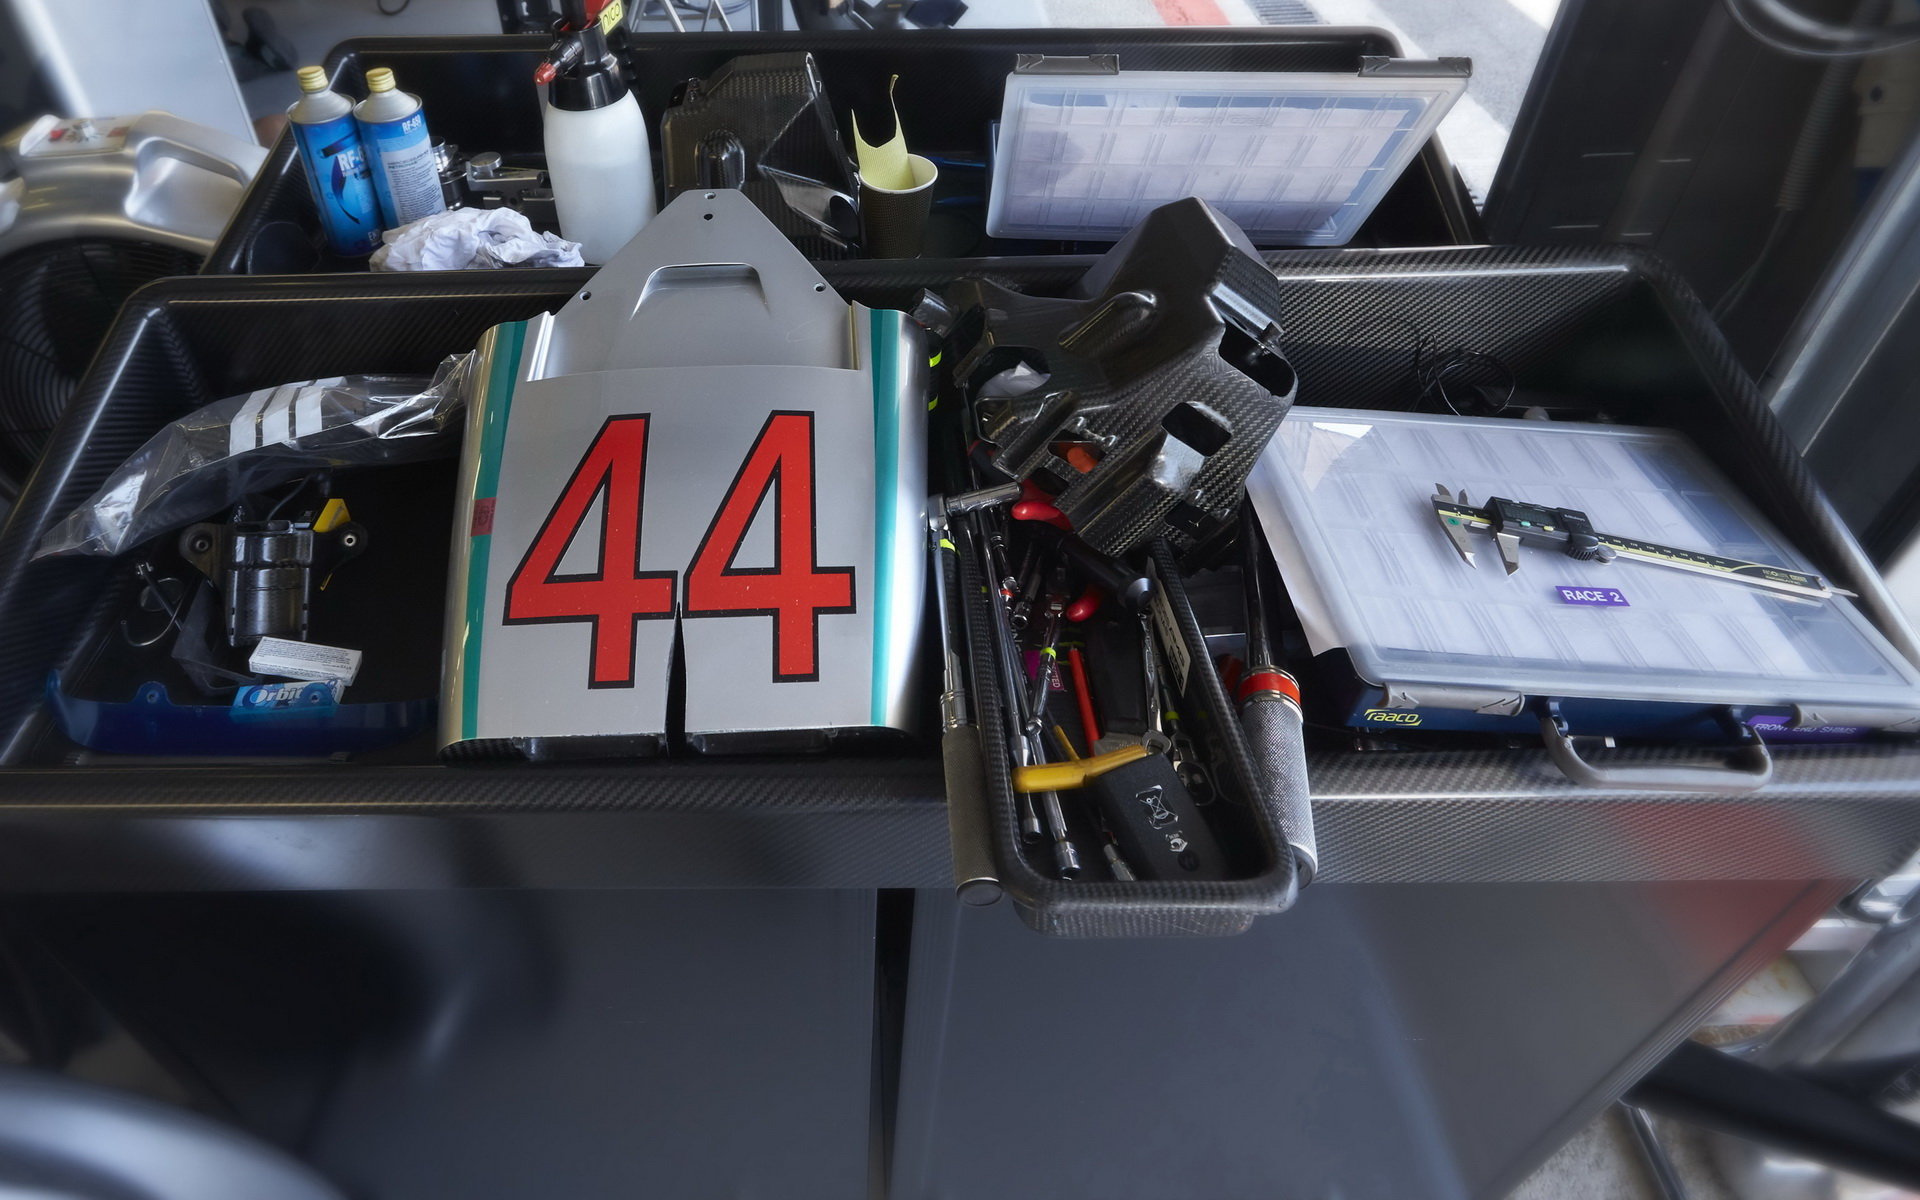 Komponenty na vůz Lewise Hamiltona v Baku